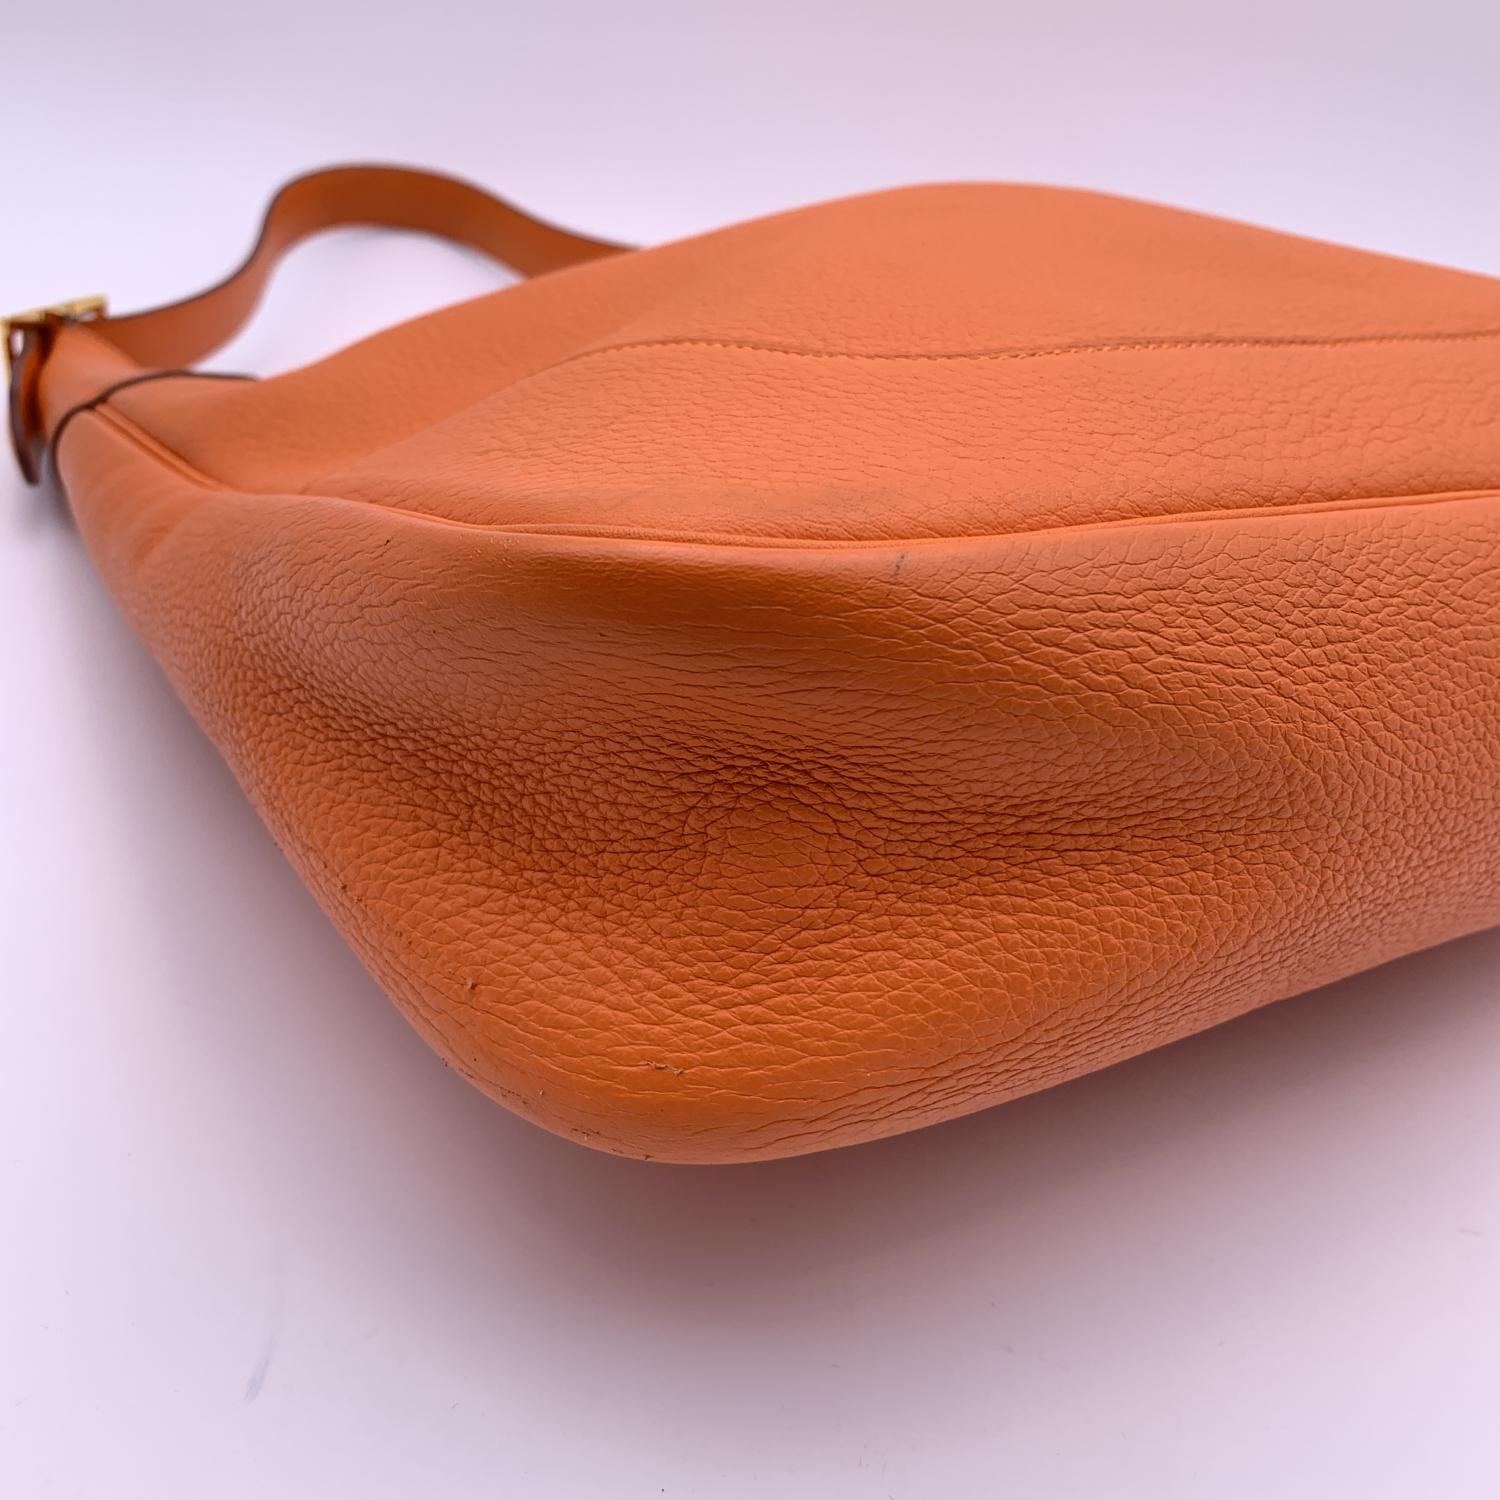 Hermes Orange Leather Sac Trim II 35 Hobo Shoulder Bag 5